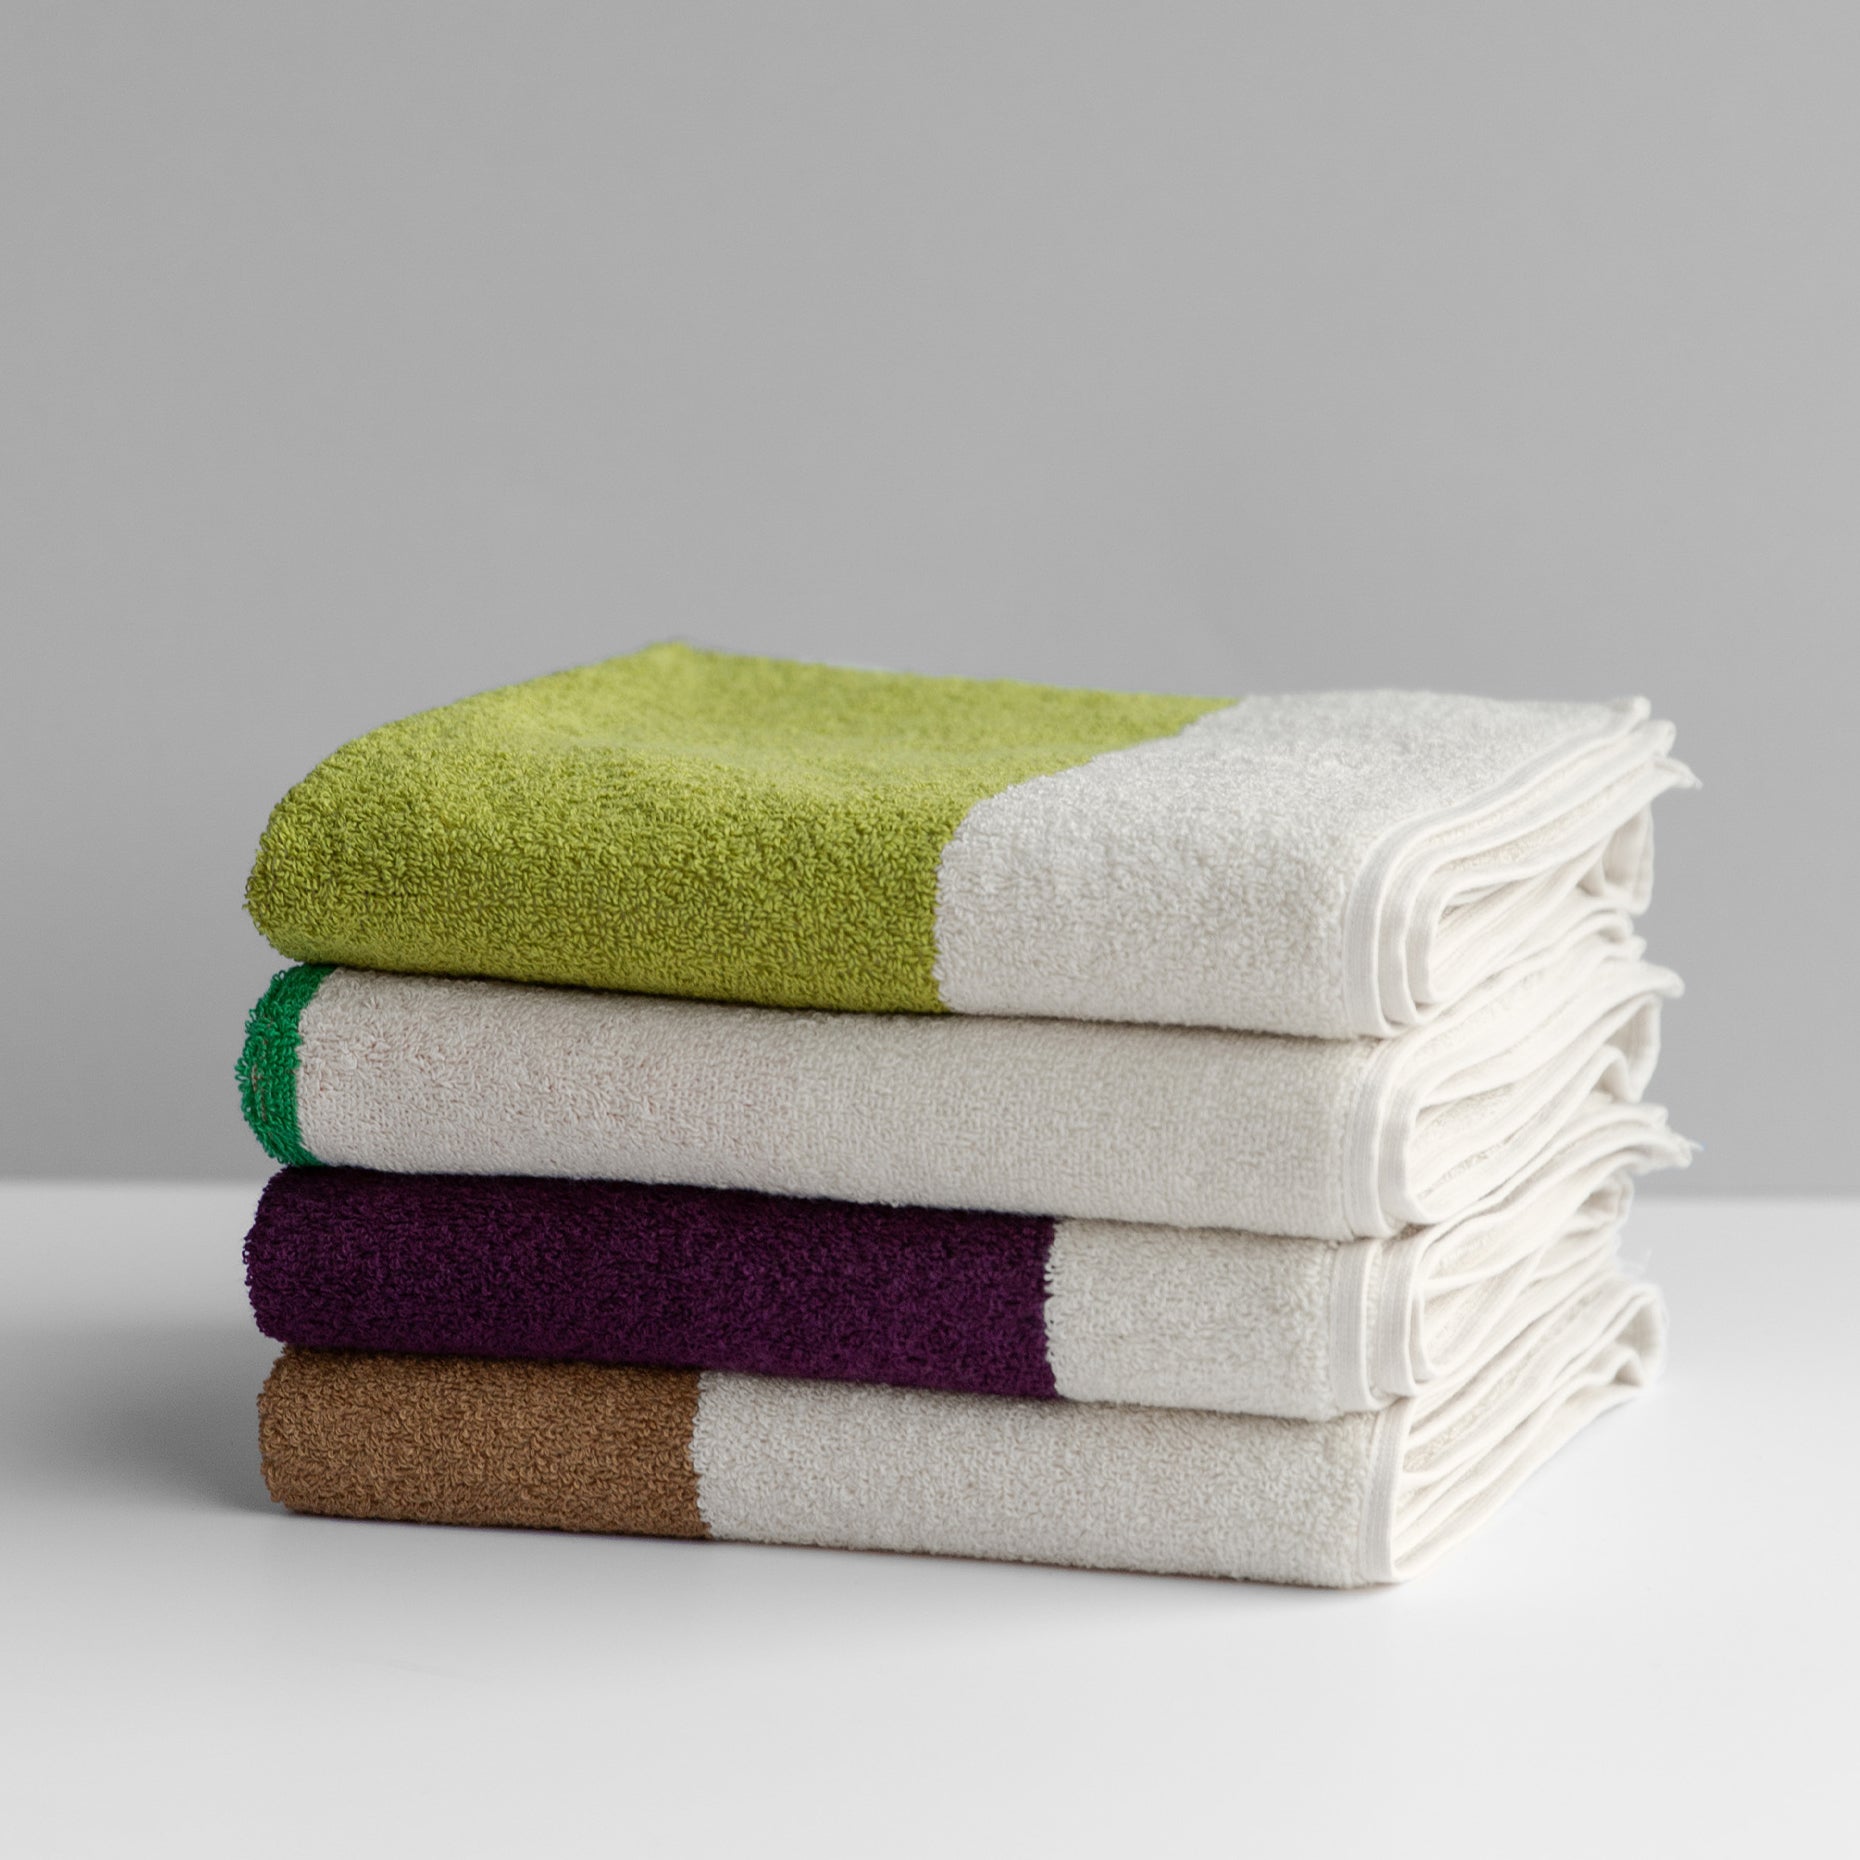 Handdoek 50x100 Orange&Green│Martens&Martens-Suite702│art. MMTT50ORGR│diverse kleuren op stapel